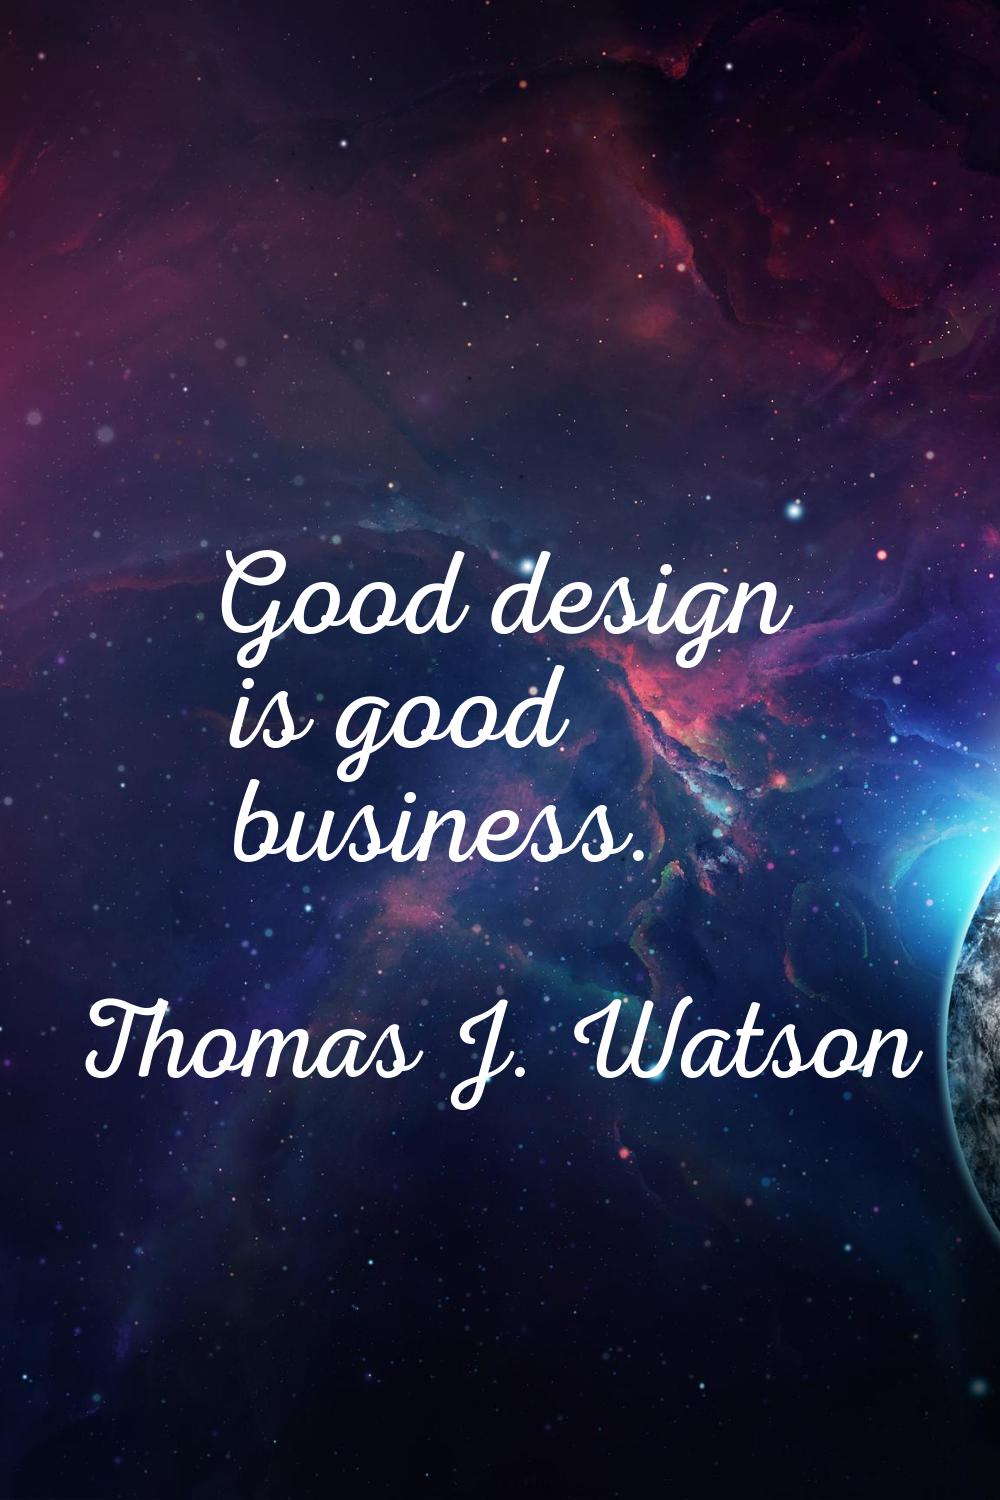 Good design is good business.